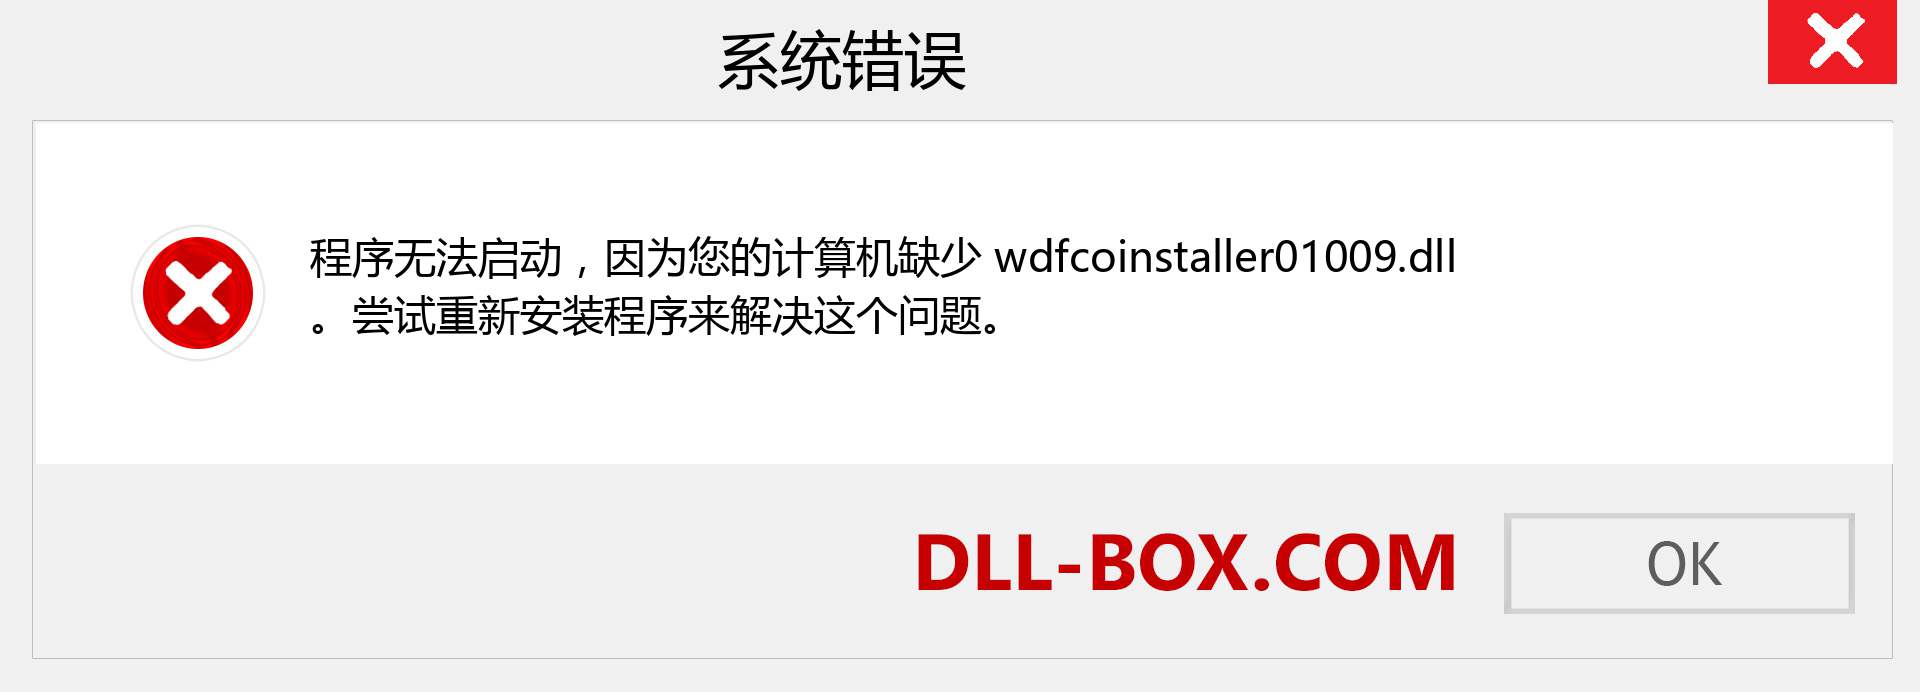 wdfcoinstaller01009.dll 文件丢失？。 适用于 Windows 7、8、10 的下载 - 修复 Windows、照片、图像上的 wdfcoinstaller01009 dll 丢失错误